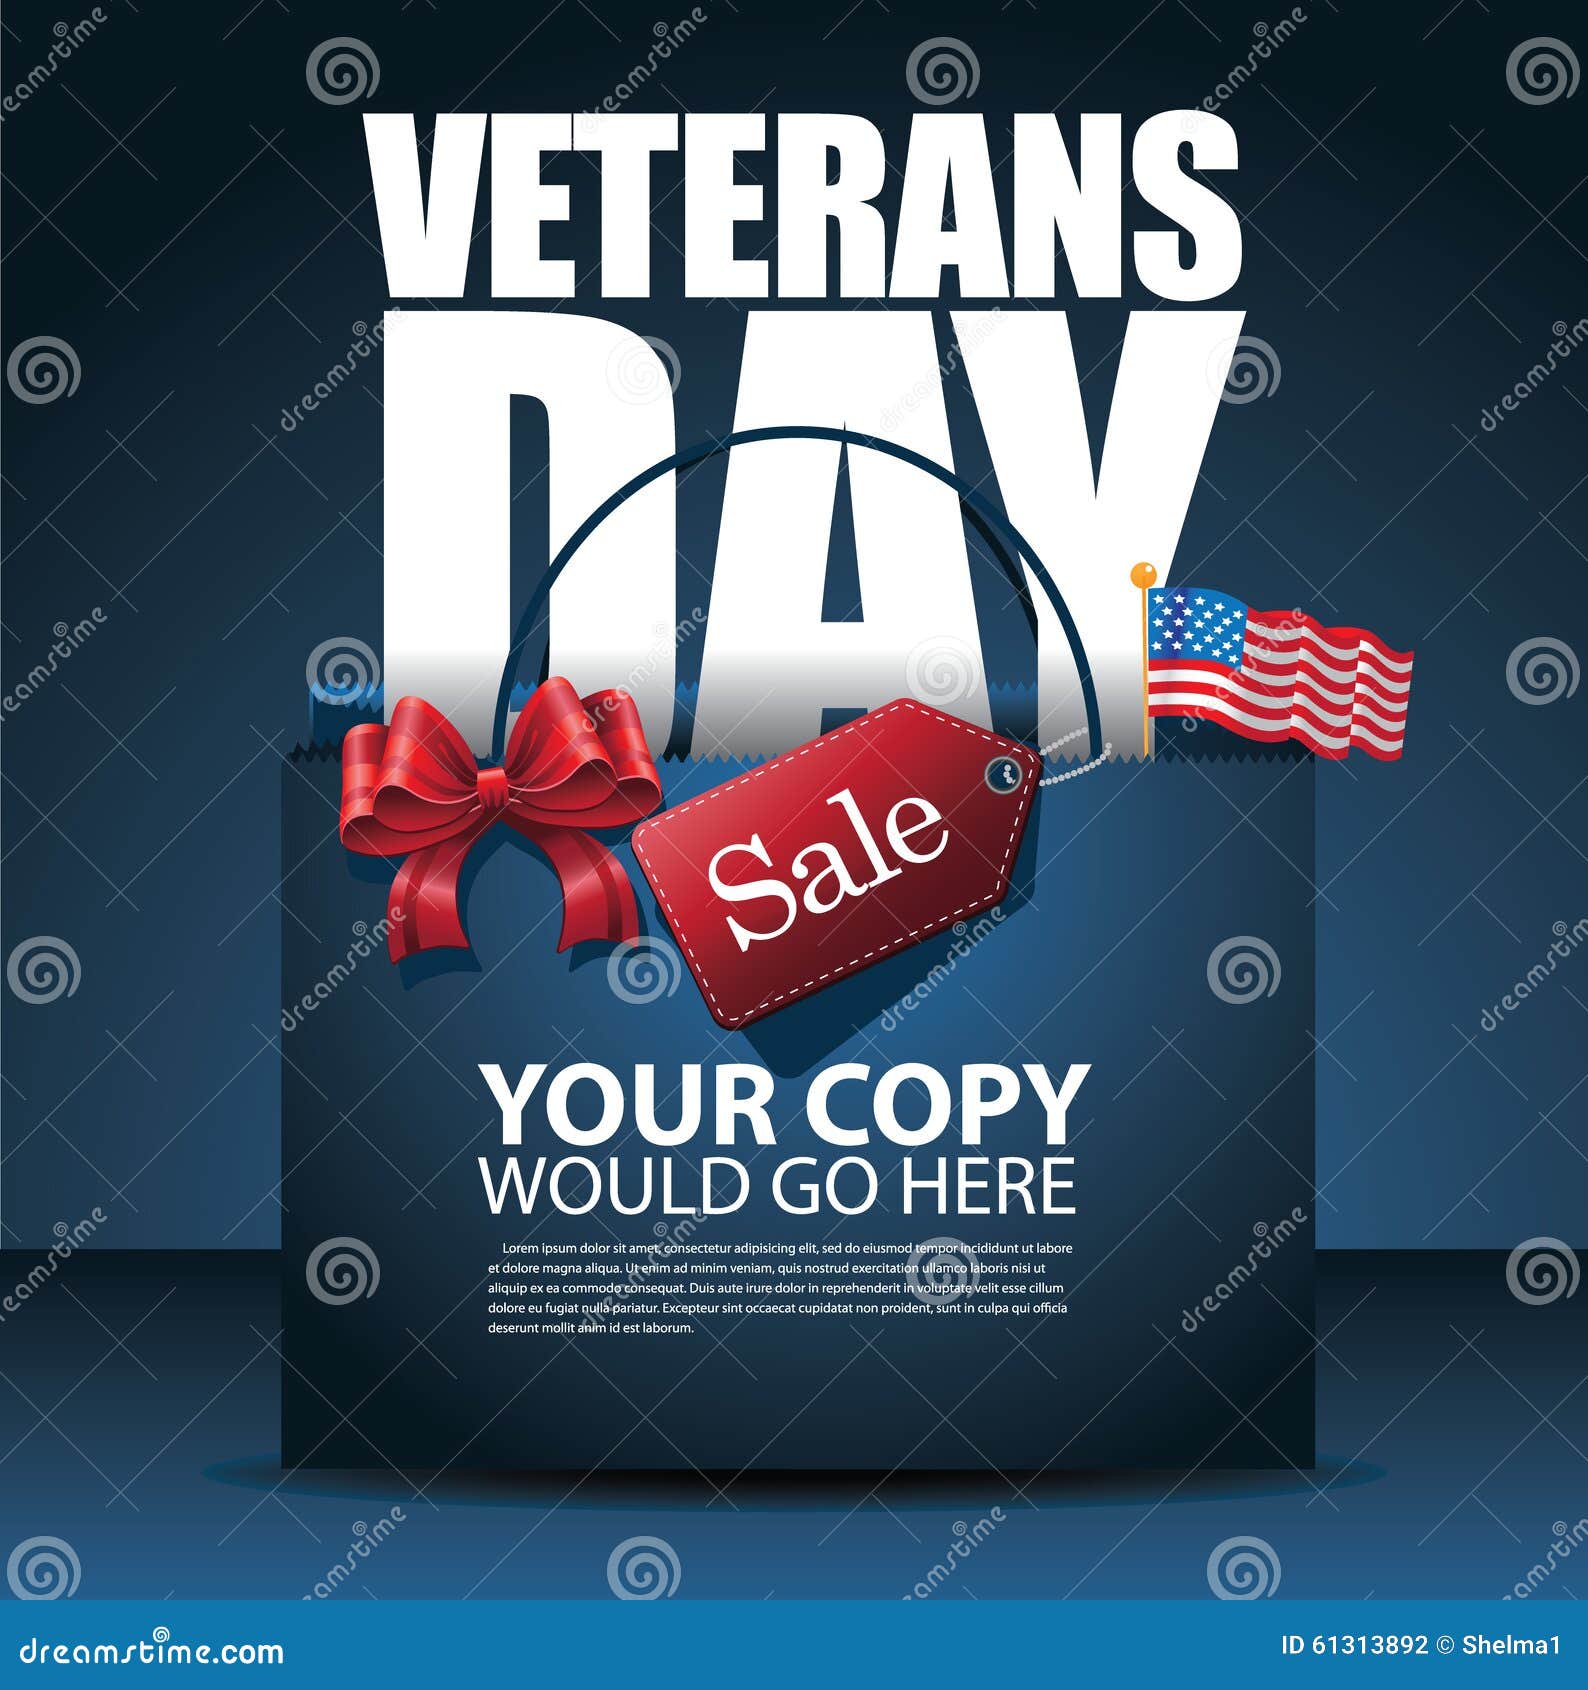 Veterans Day design Sale shopping bag Background. EPS 10 vector royalty free stock illustration for greeting card, ad, promotion, poster, flier, blog, article, social media, marketing